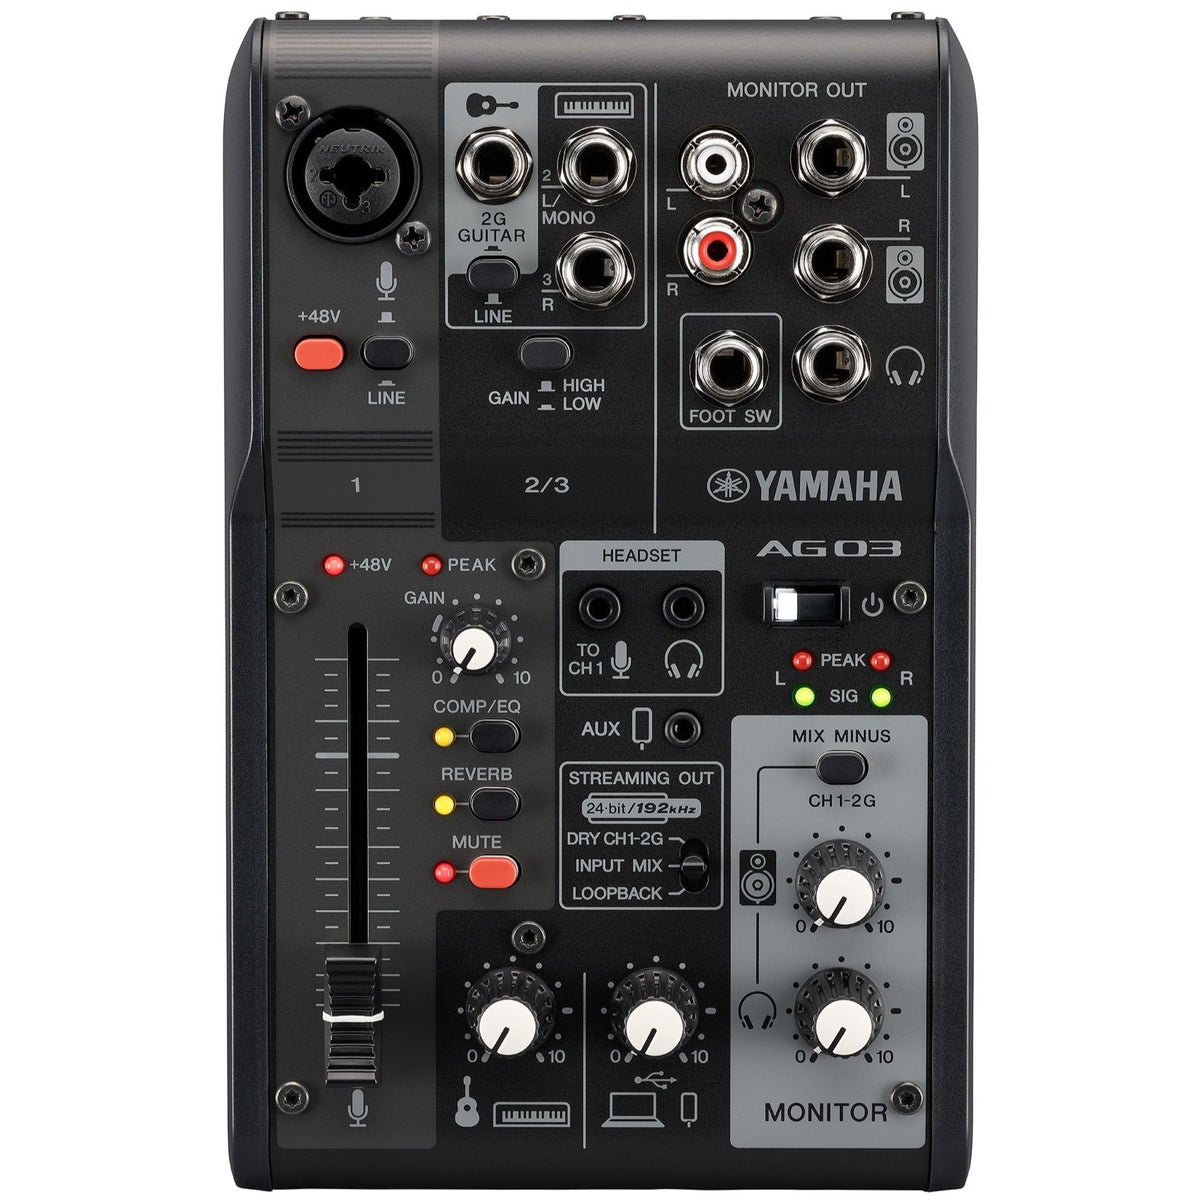 Yamaha AG03MK2B 3-Channel Mixer/USB Audio Interface for iOS/MAC/PC, Black